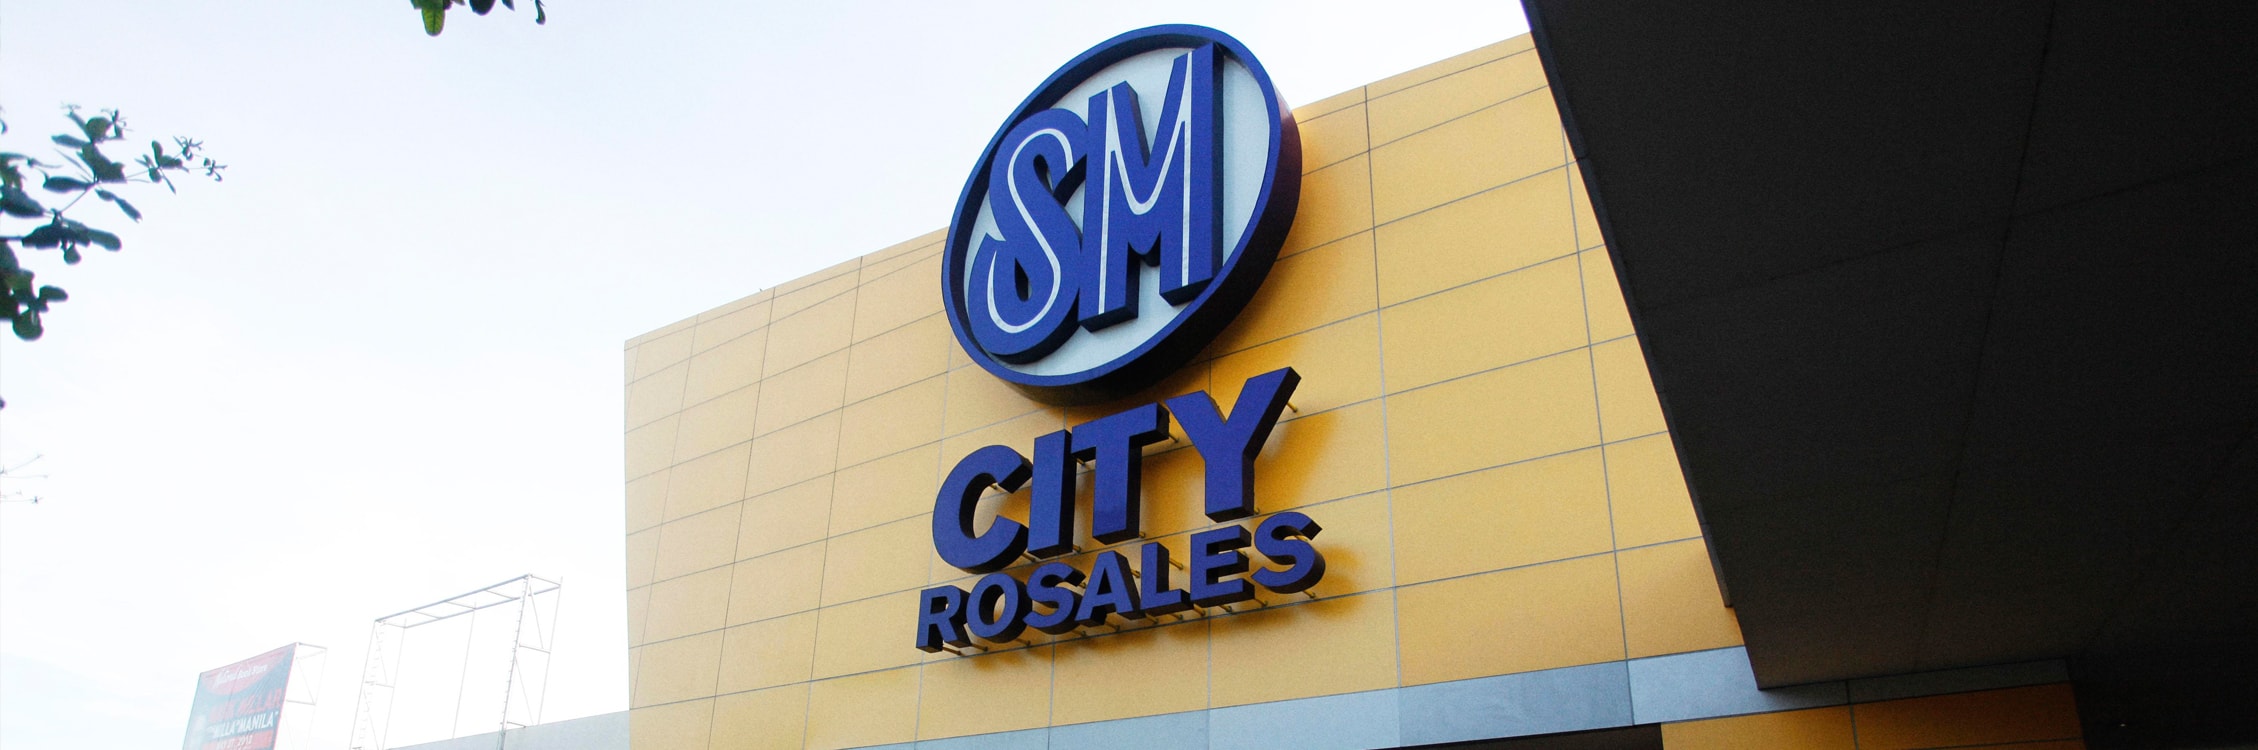 SM City Rosales